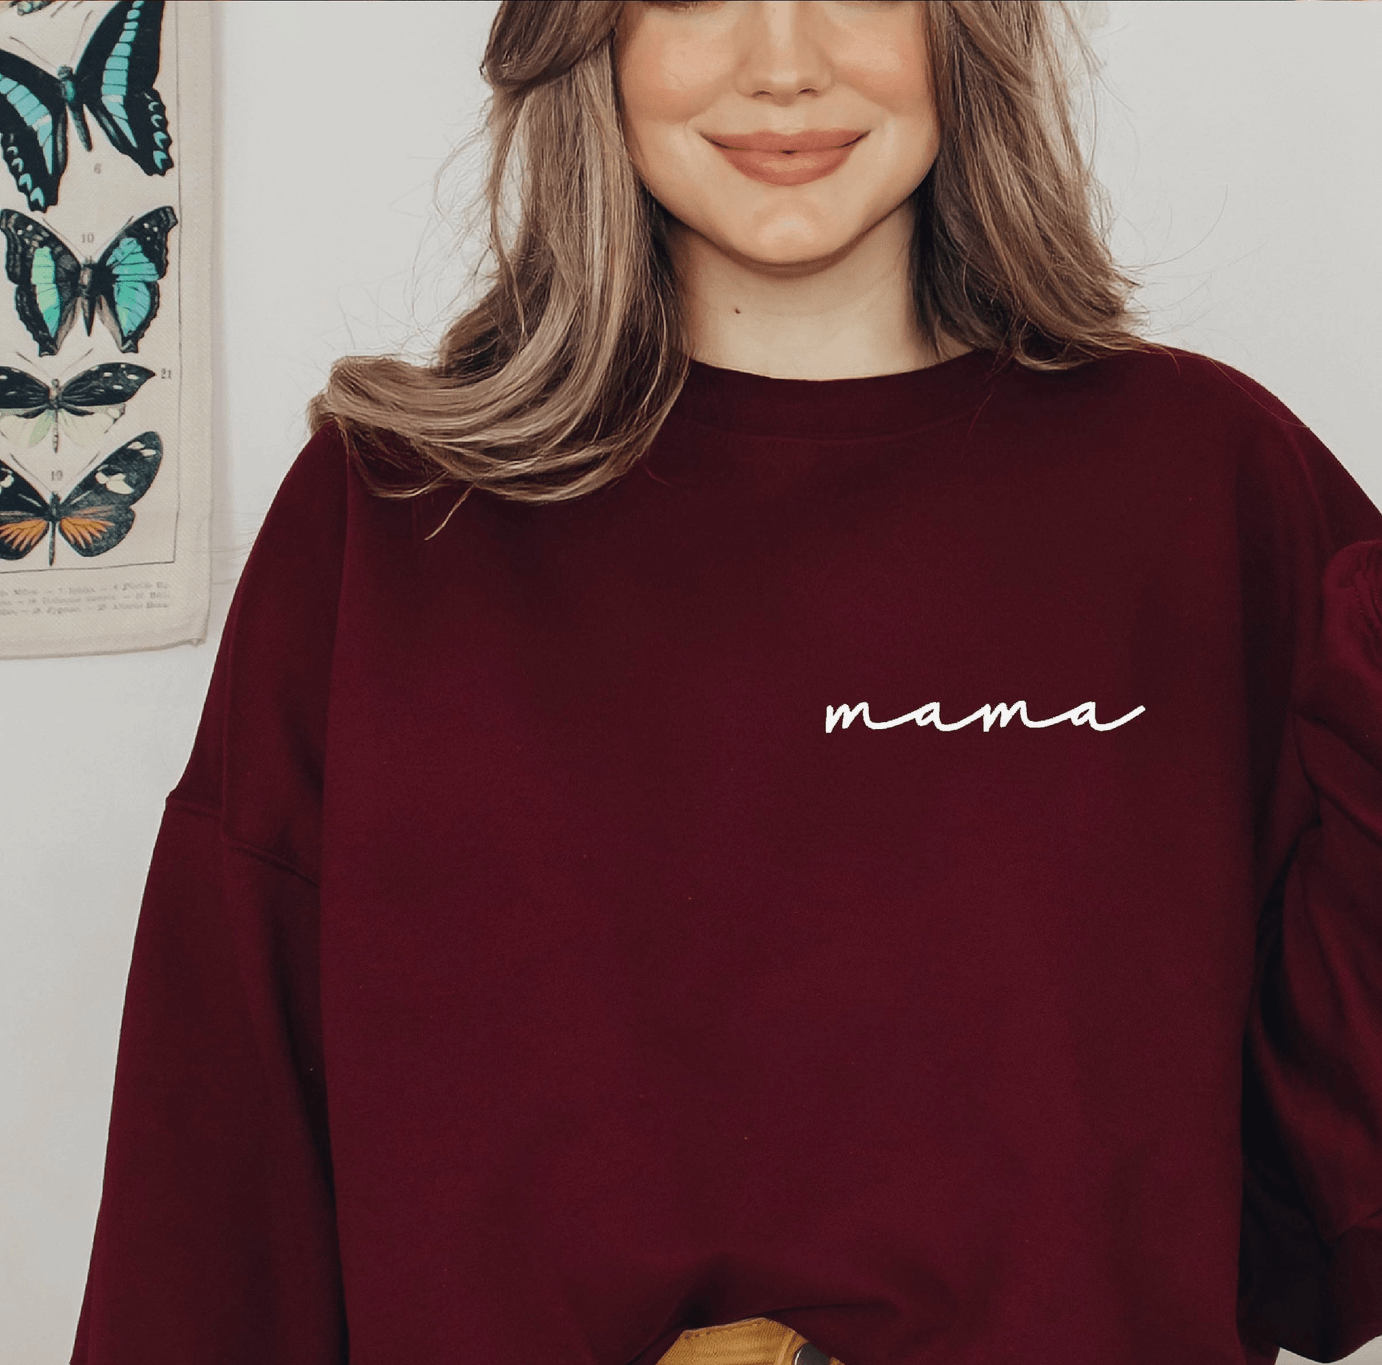 Embroidered Mama Crewneck Sweatshirt mama apparel Maple & Co. Boutique S-Maroon  